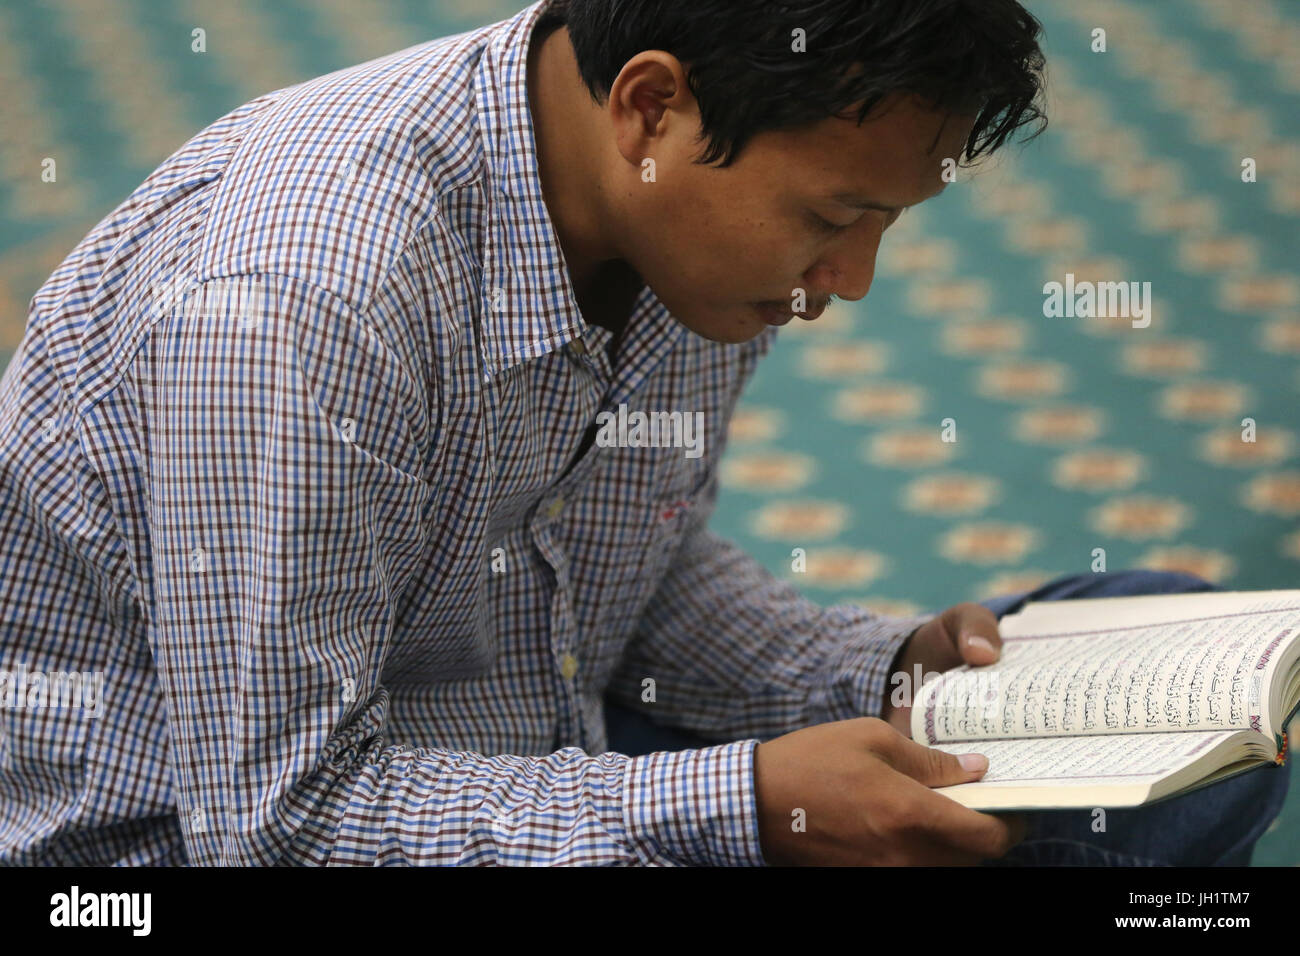 Masjid Musulman (Saigon Central Mosque). Man reading the holy Quran. Ho chi Minh City. Vietnam. Stock Photo